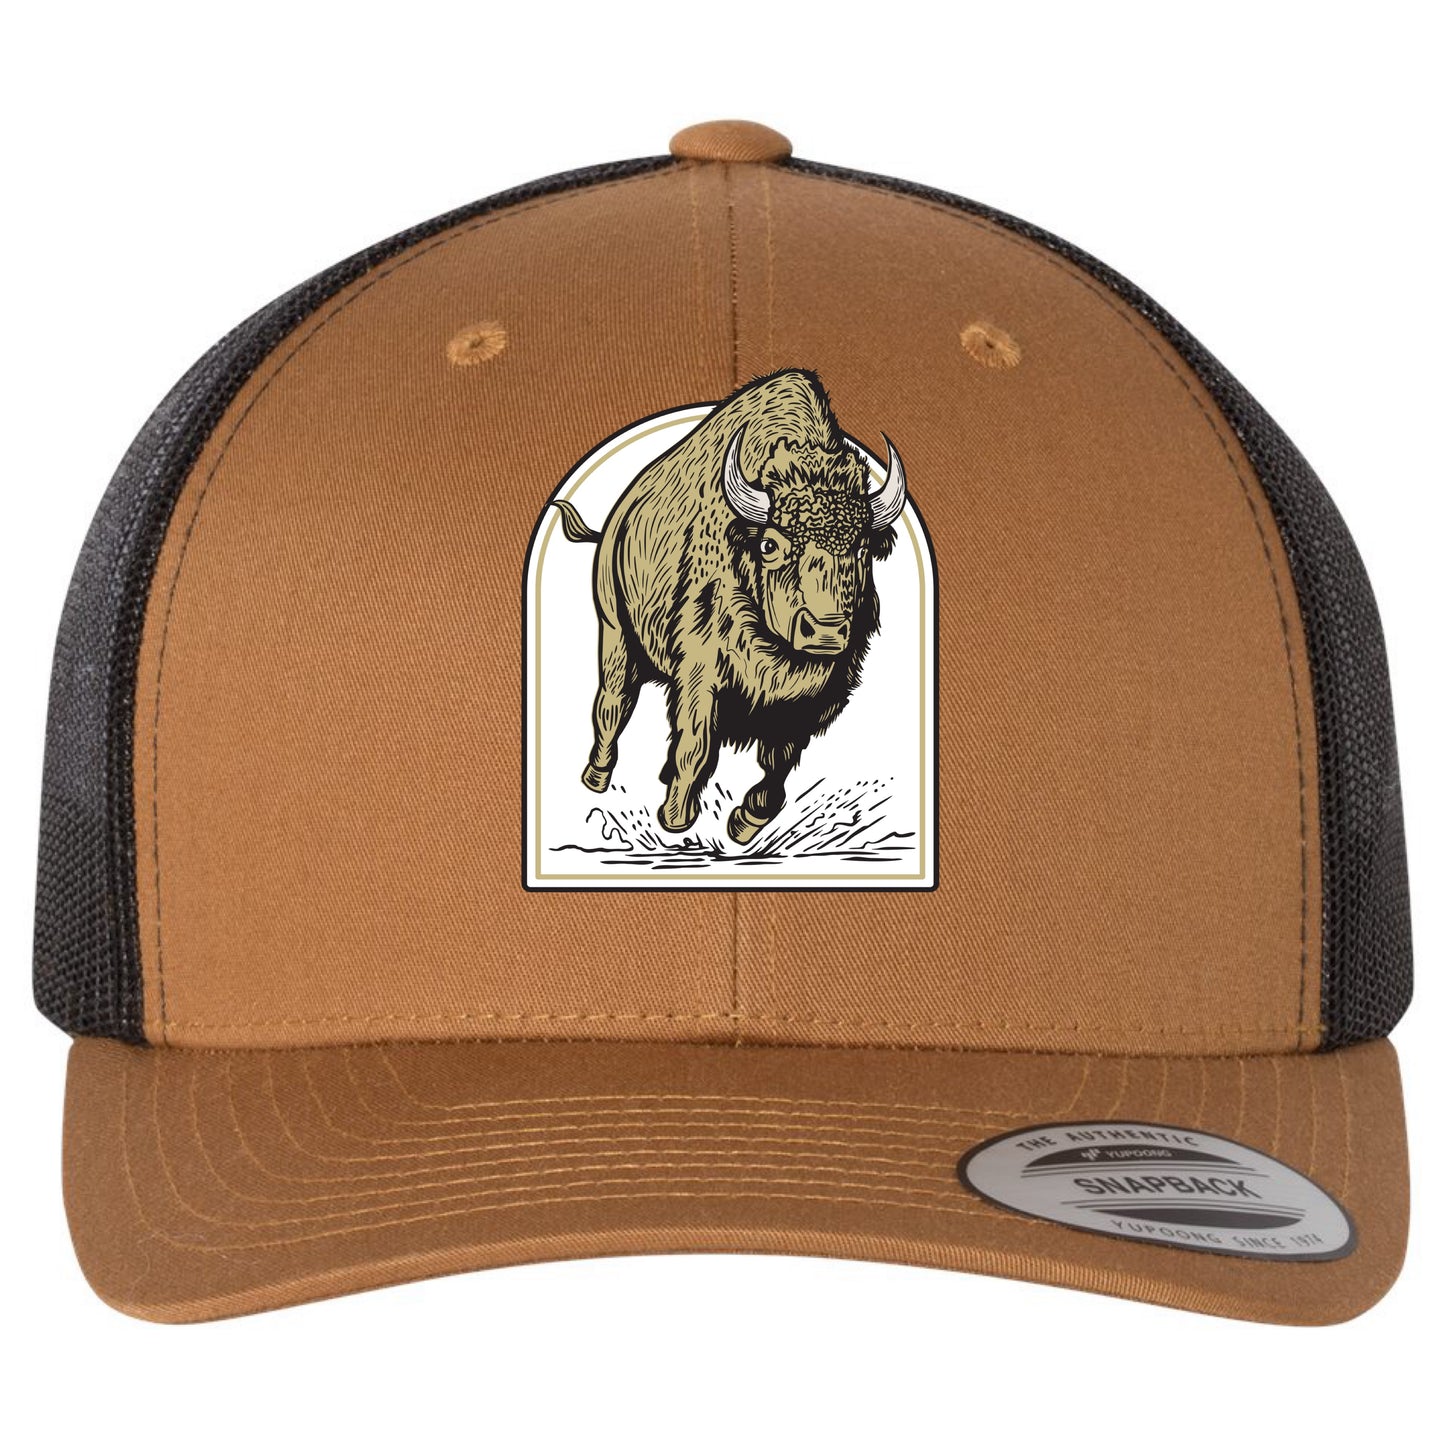 Colorado Wild Buffaloes Mascot Series YP Snapback Trucker Hat- Caramel/ Black - Ten Gallon Hat Co.